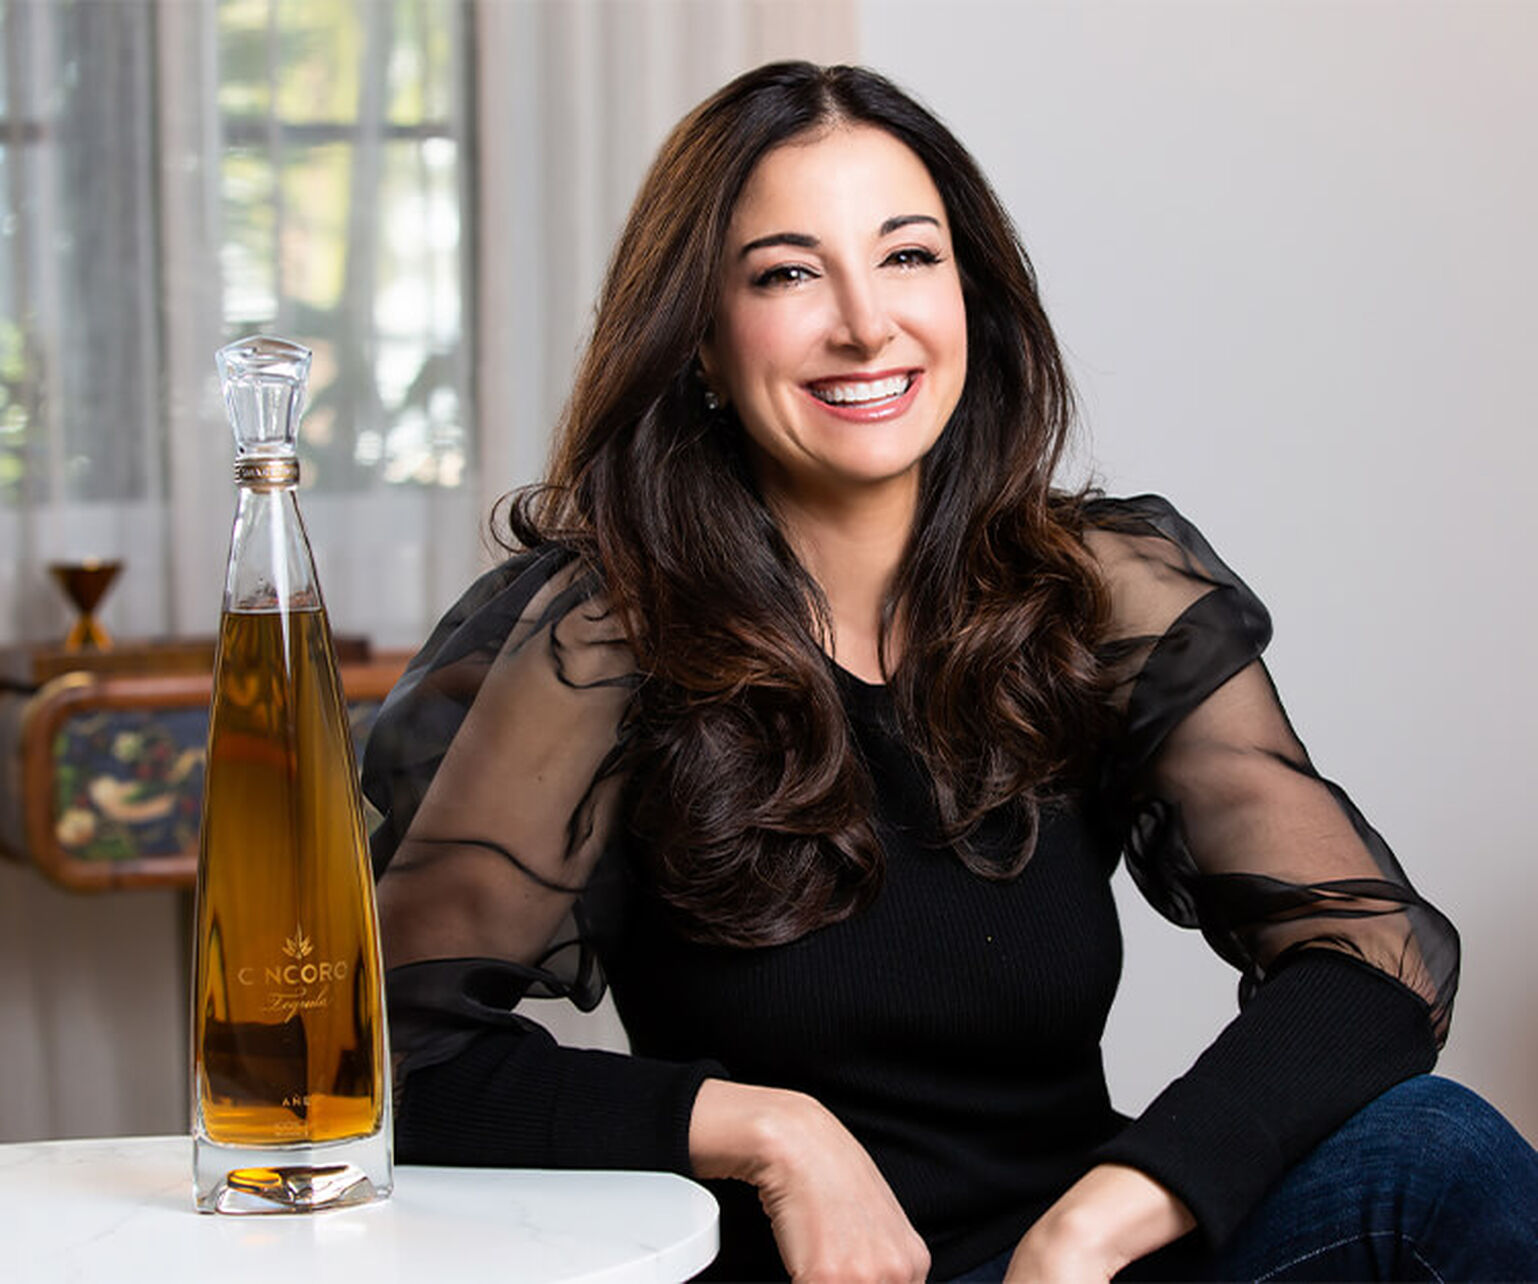 Emilia Fazzalari smiles as she sits next to a bottle of Cincoro